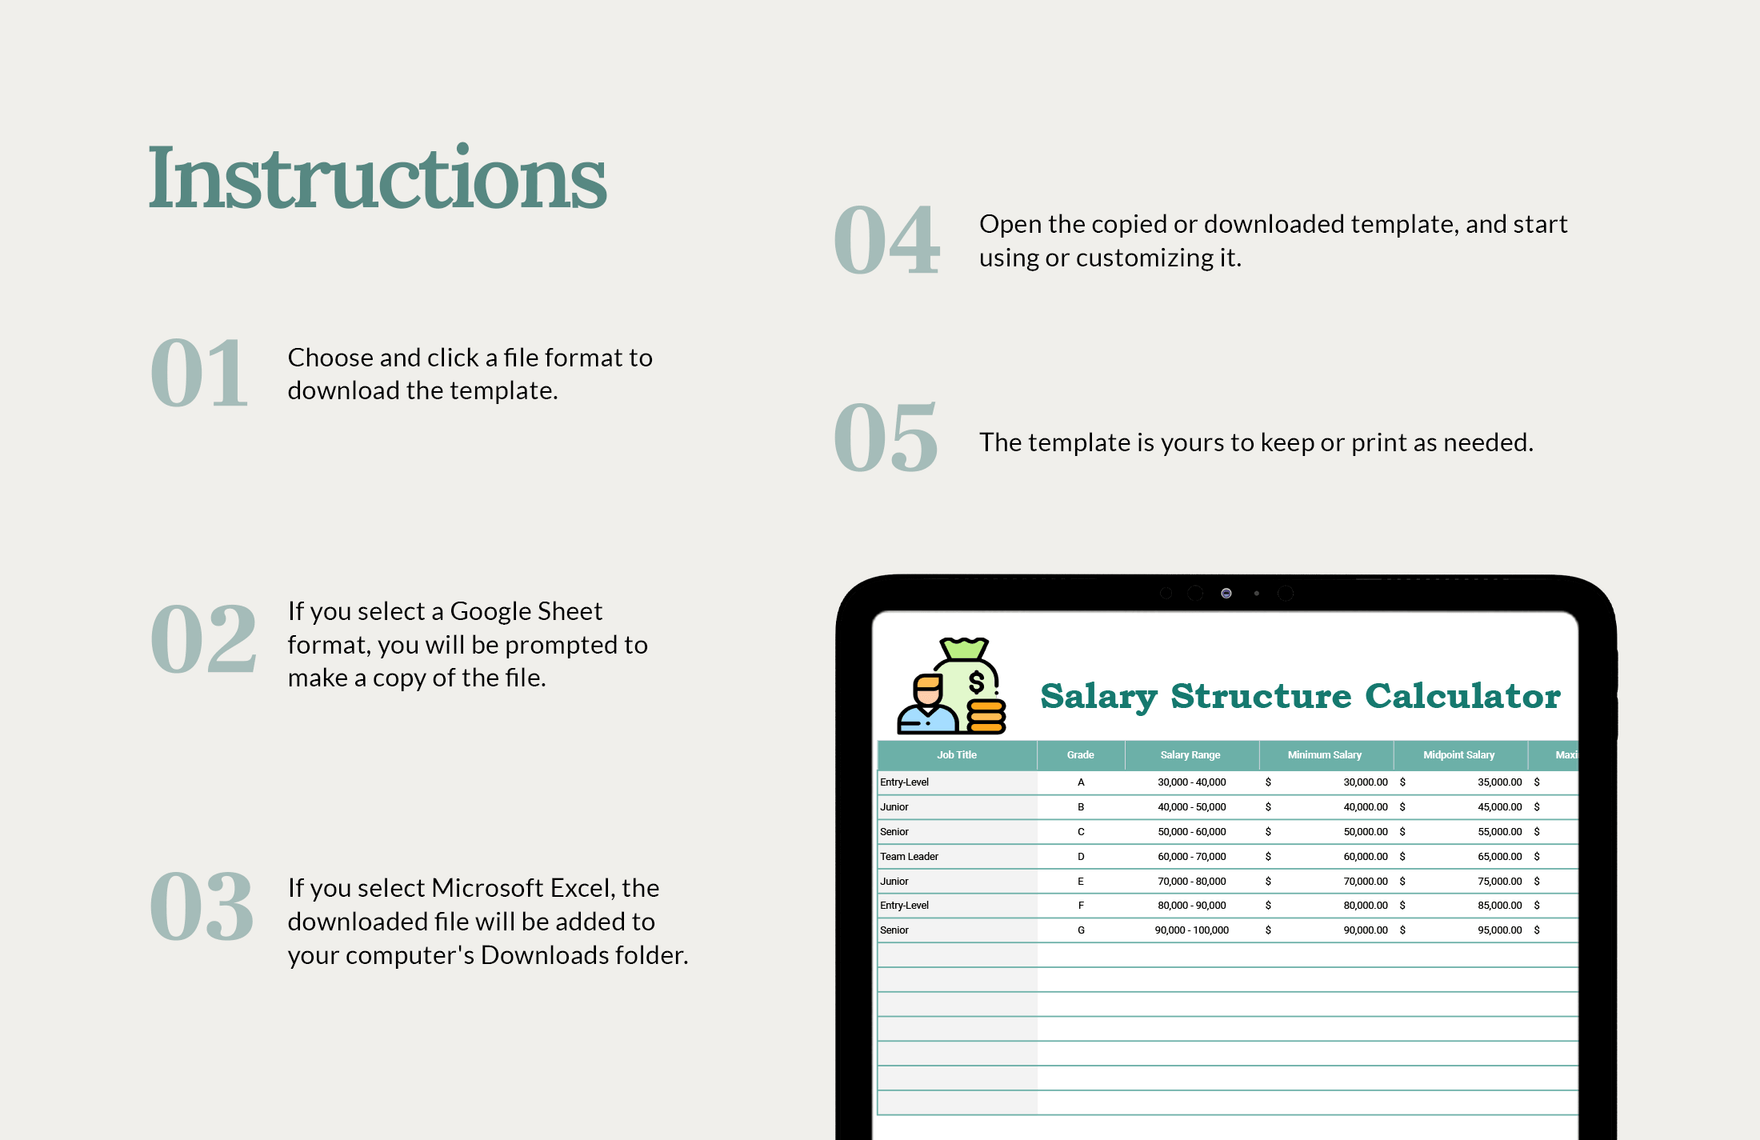 Salary Structure Calculator Template